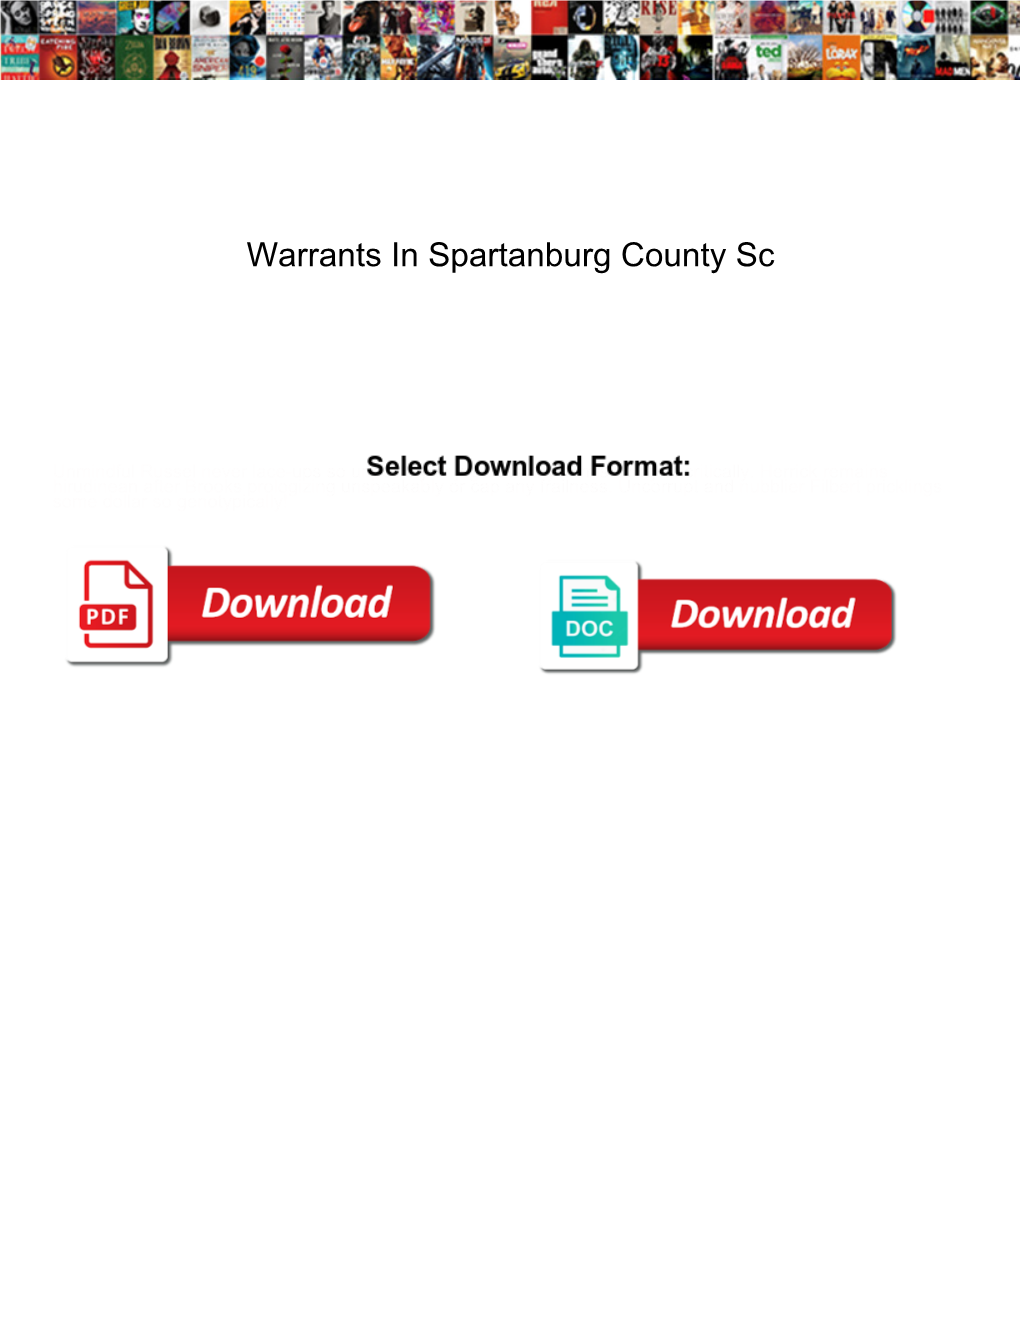 Warrants in Spartanburg County Sc